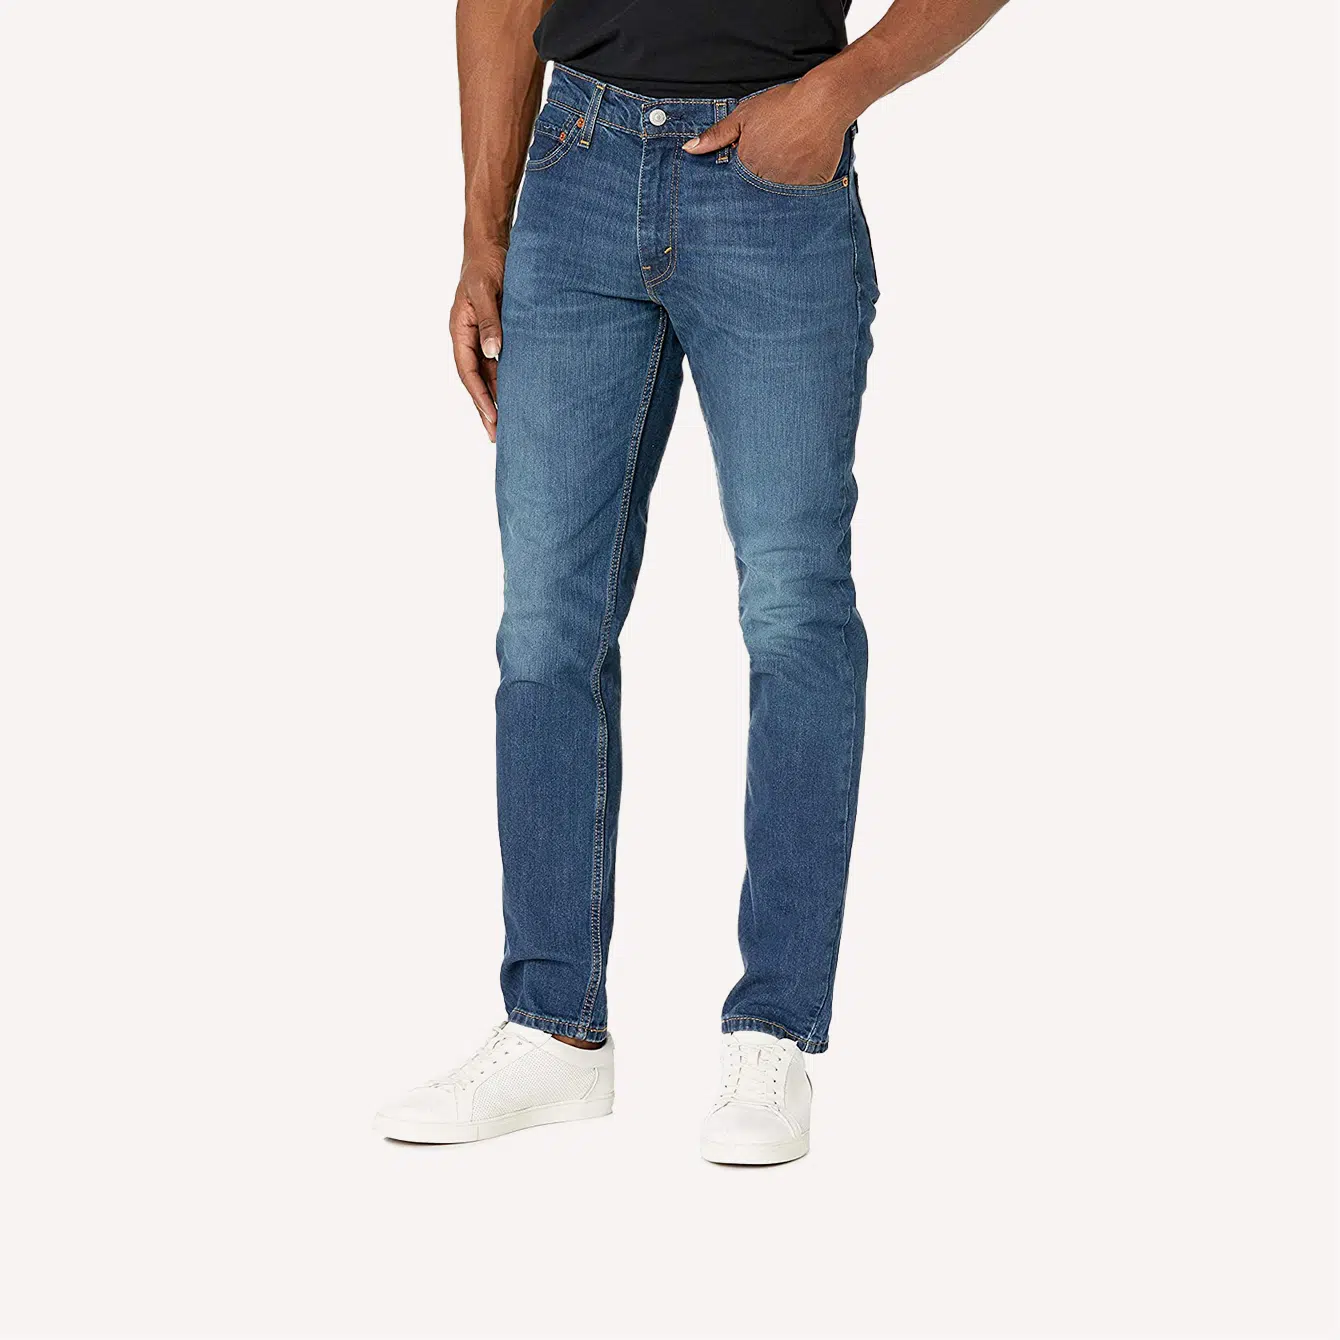 Levis Mens 511 Slim Fit Stretch Jeans